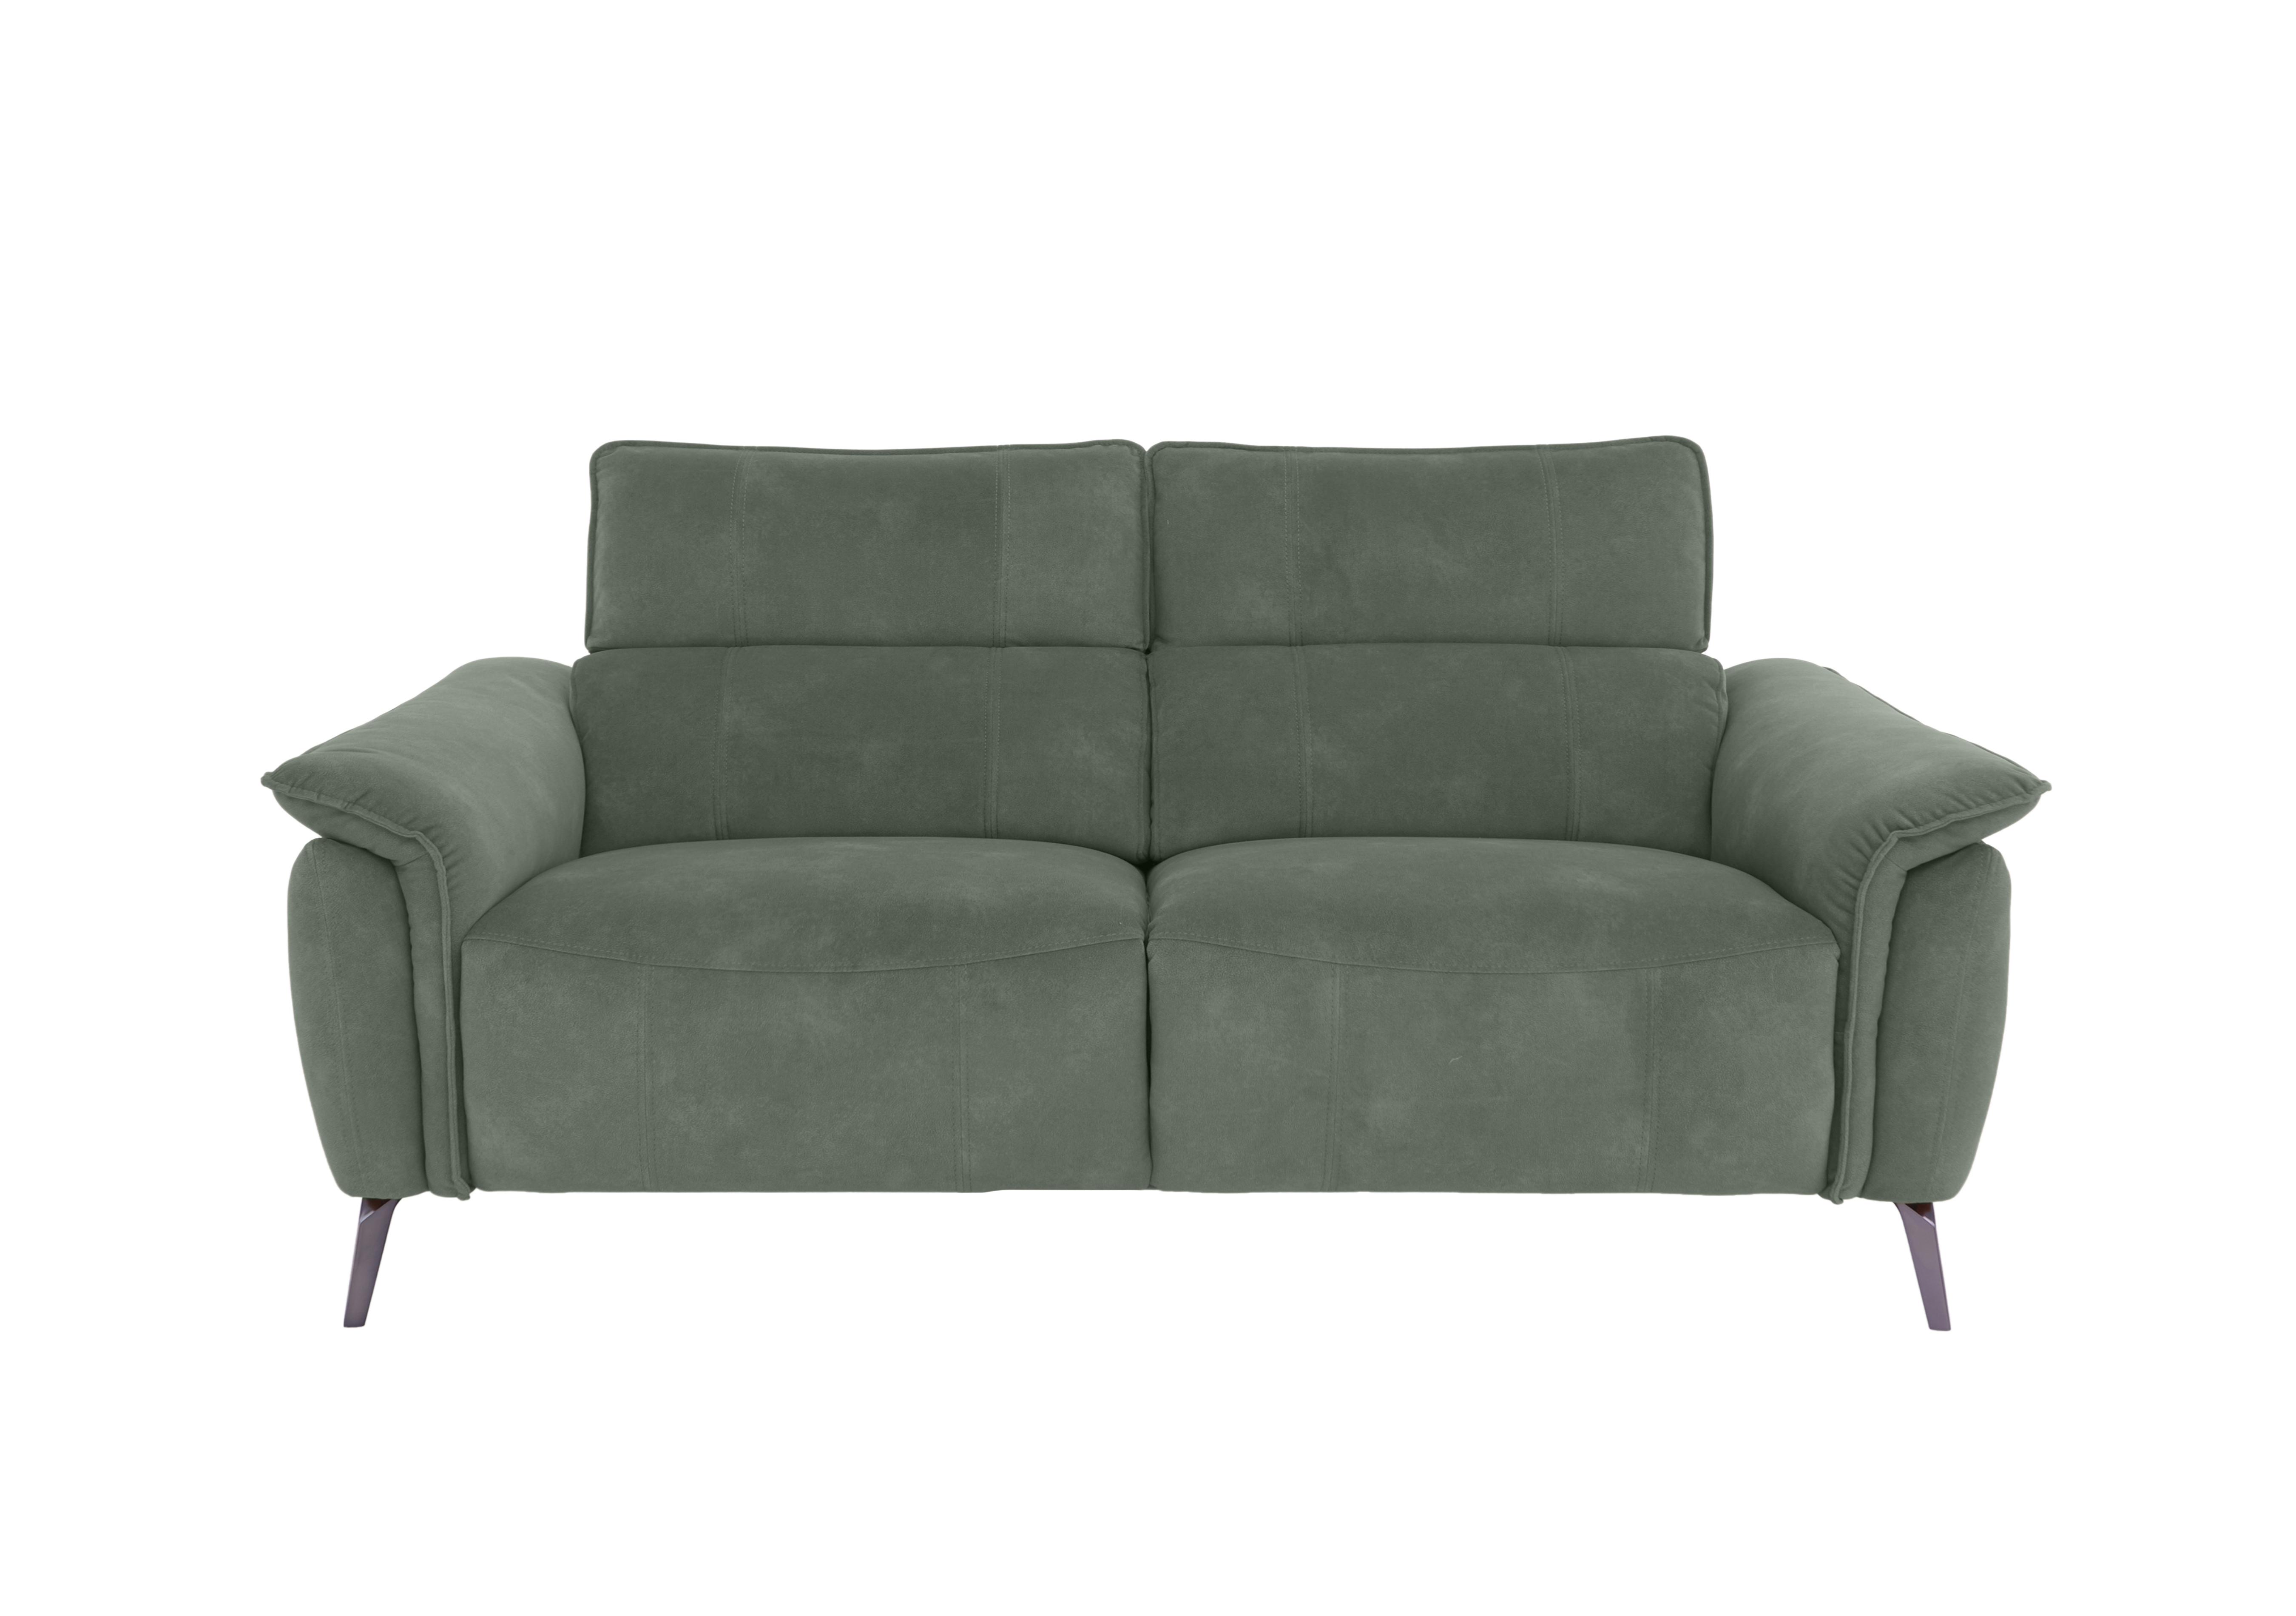 Jude 3 Seater Fabric Sofa in Fern Dexter 14 43514 on Furniture Village